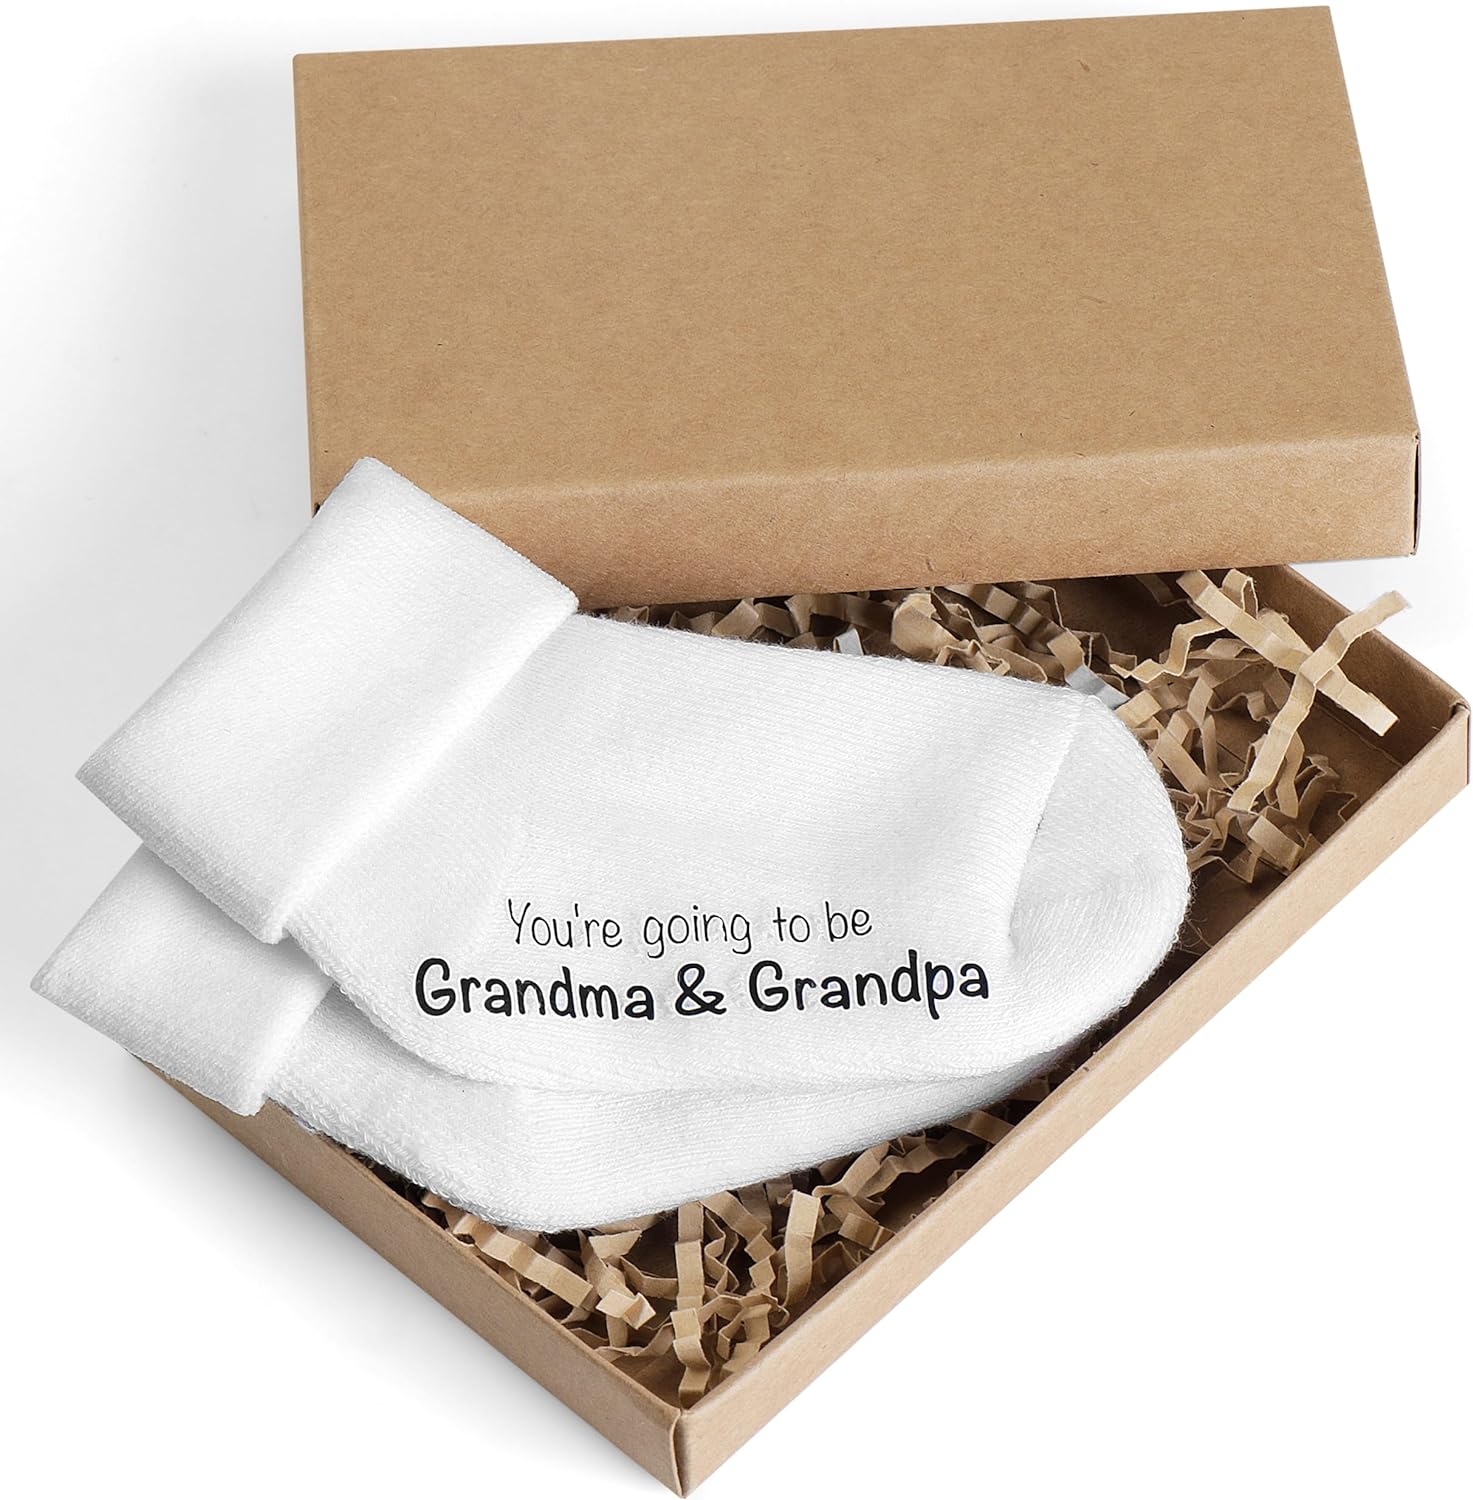 VELENTI Grandparents Baby Announcement Gift - You Will Be Grandpa and Grandma Baby Socks in Gift Box - Cute Pregnancy Announcements - Grandparent Announcement Ideas - Surprise Baby Announcement Gifts